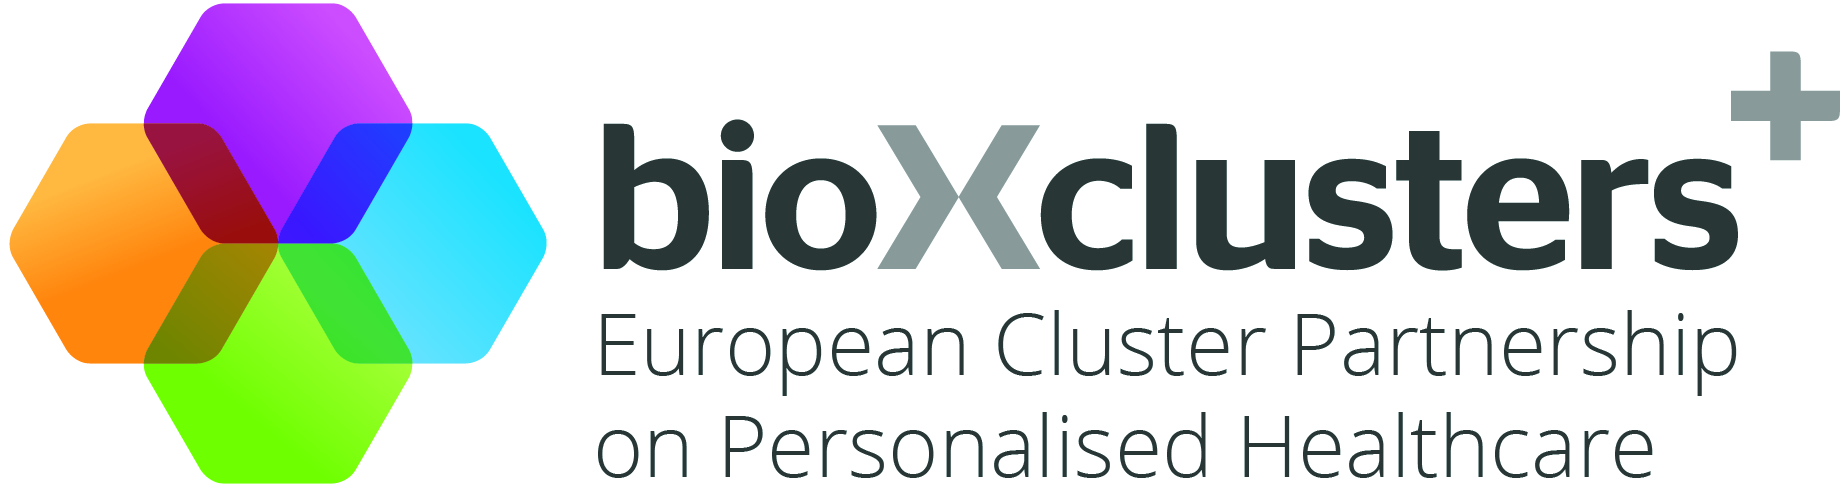 bioxclusters_logo_plus_horizontal